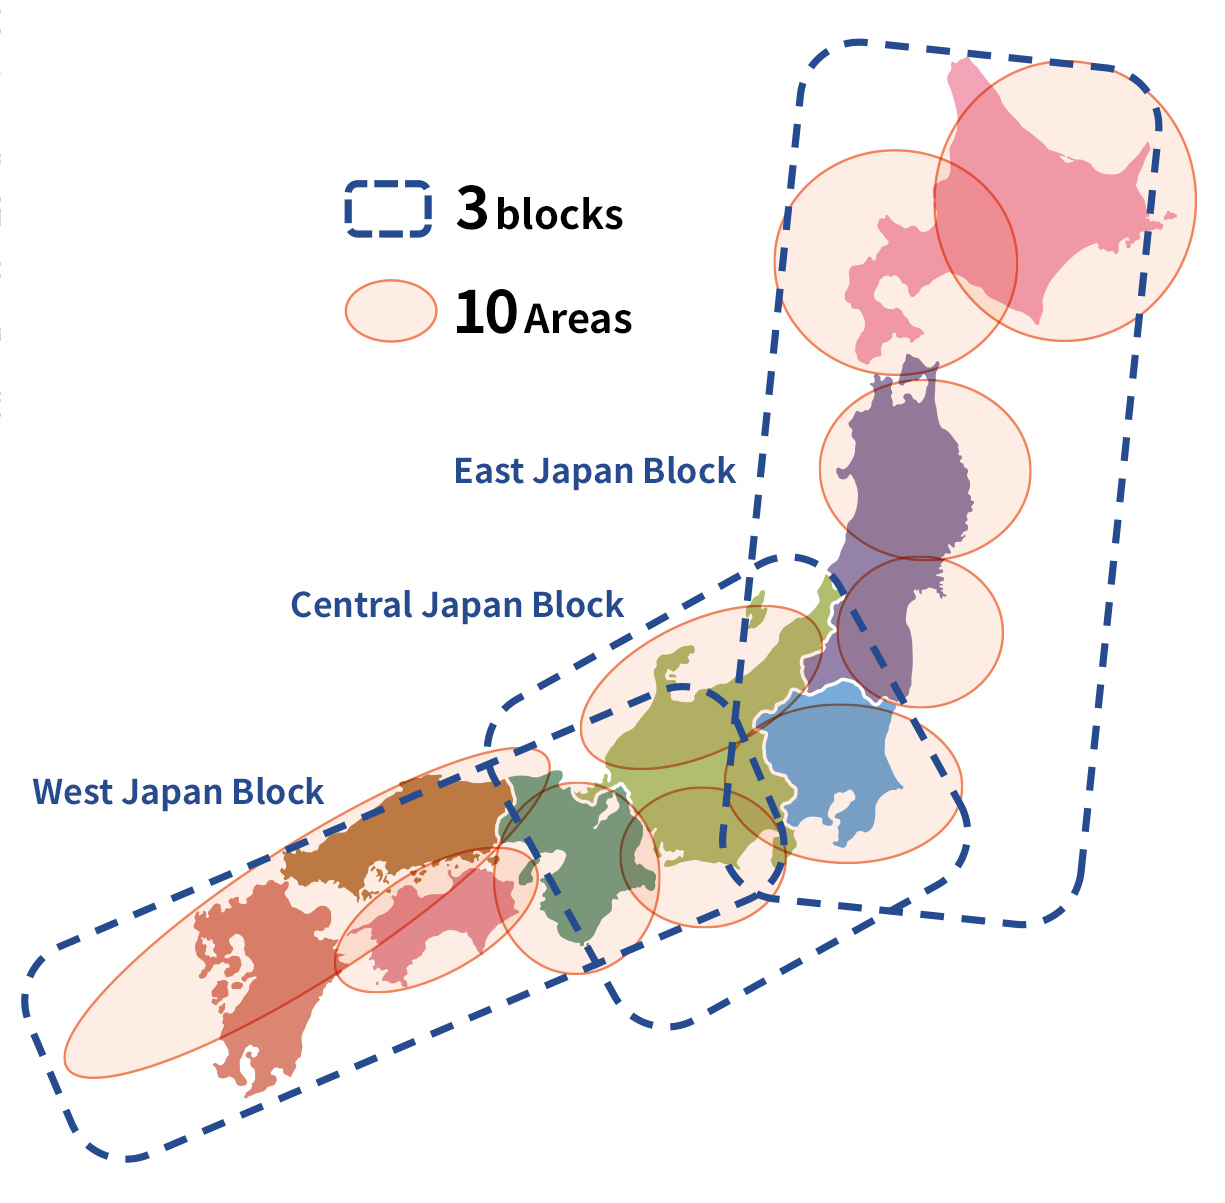 Blocks, area coverage